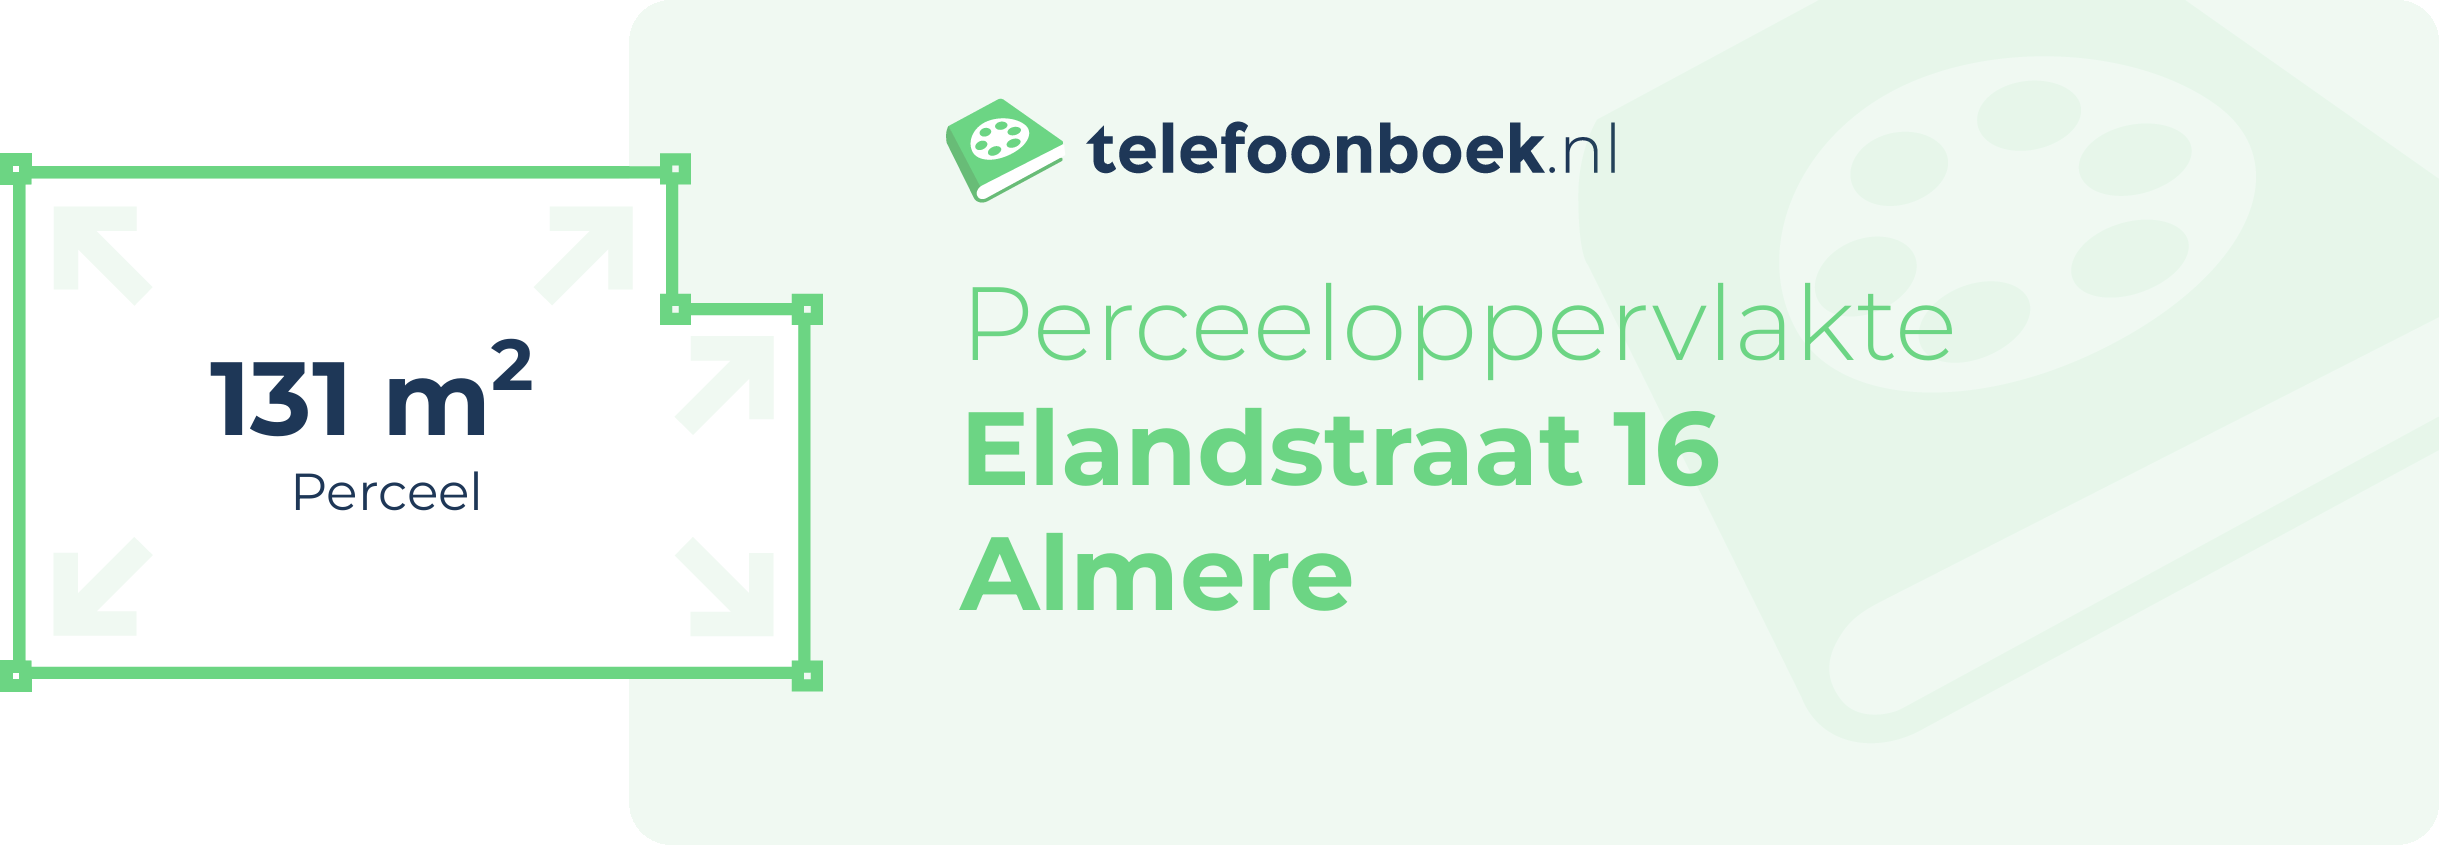 Perceeloppervlakte Elandstraat 16 Almere